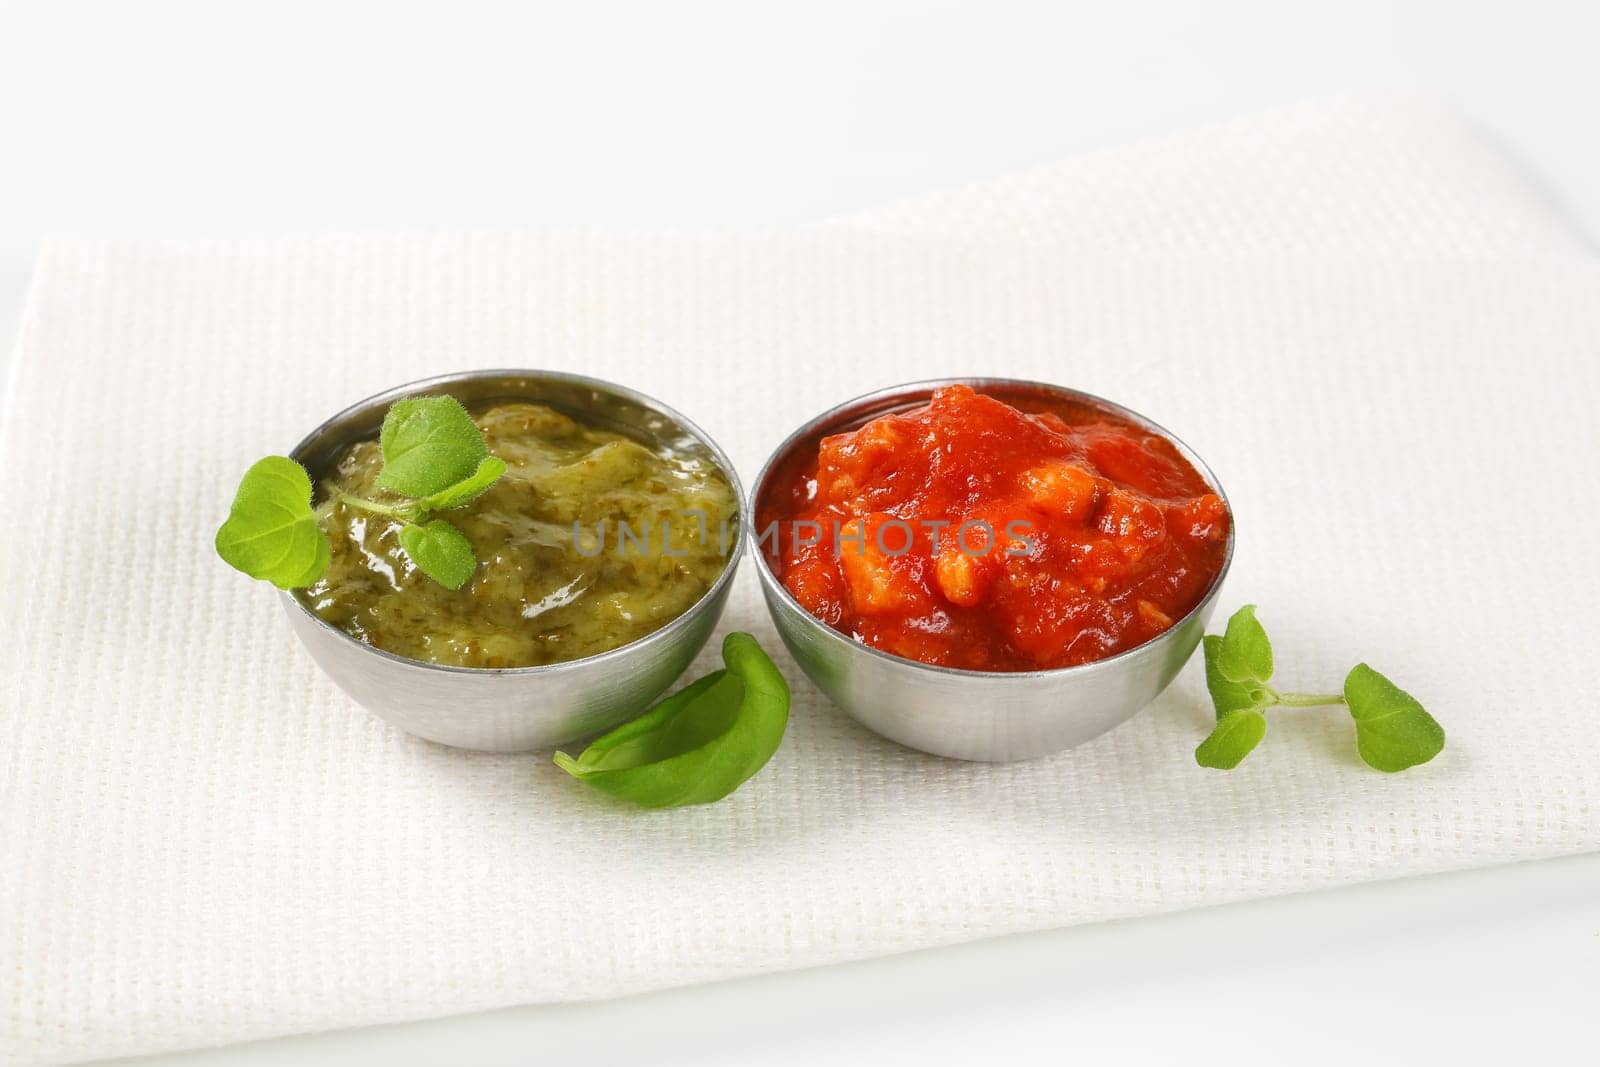 Basil pesto and tomato salsa by Digifoodstock